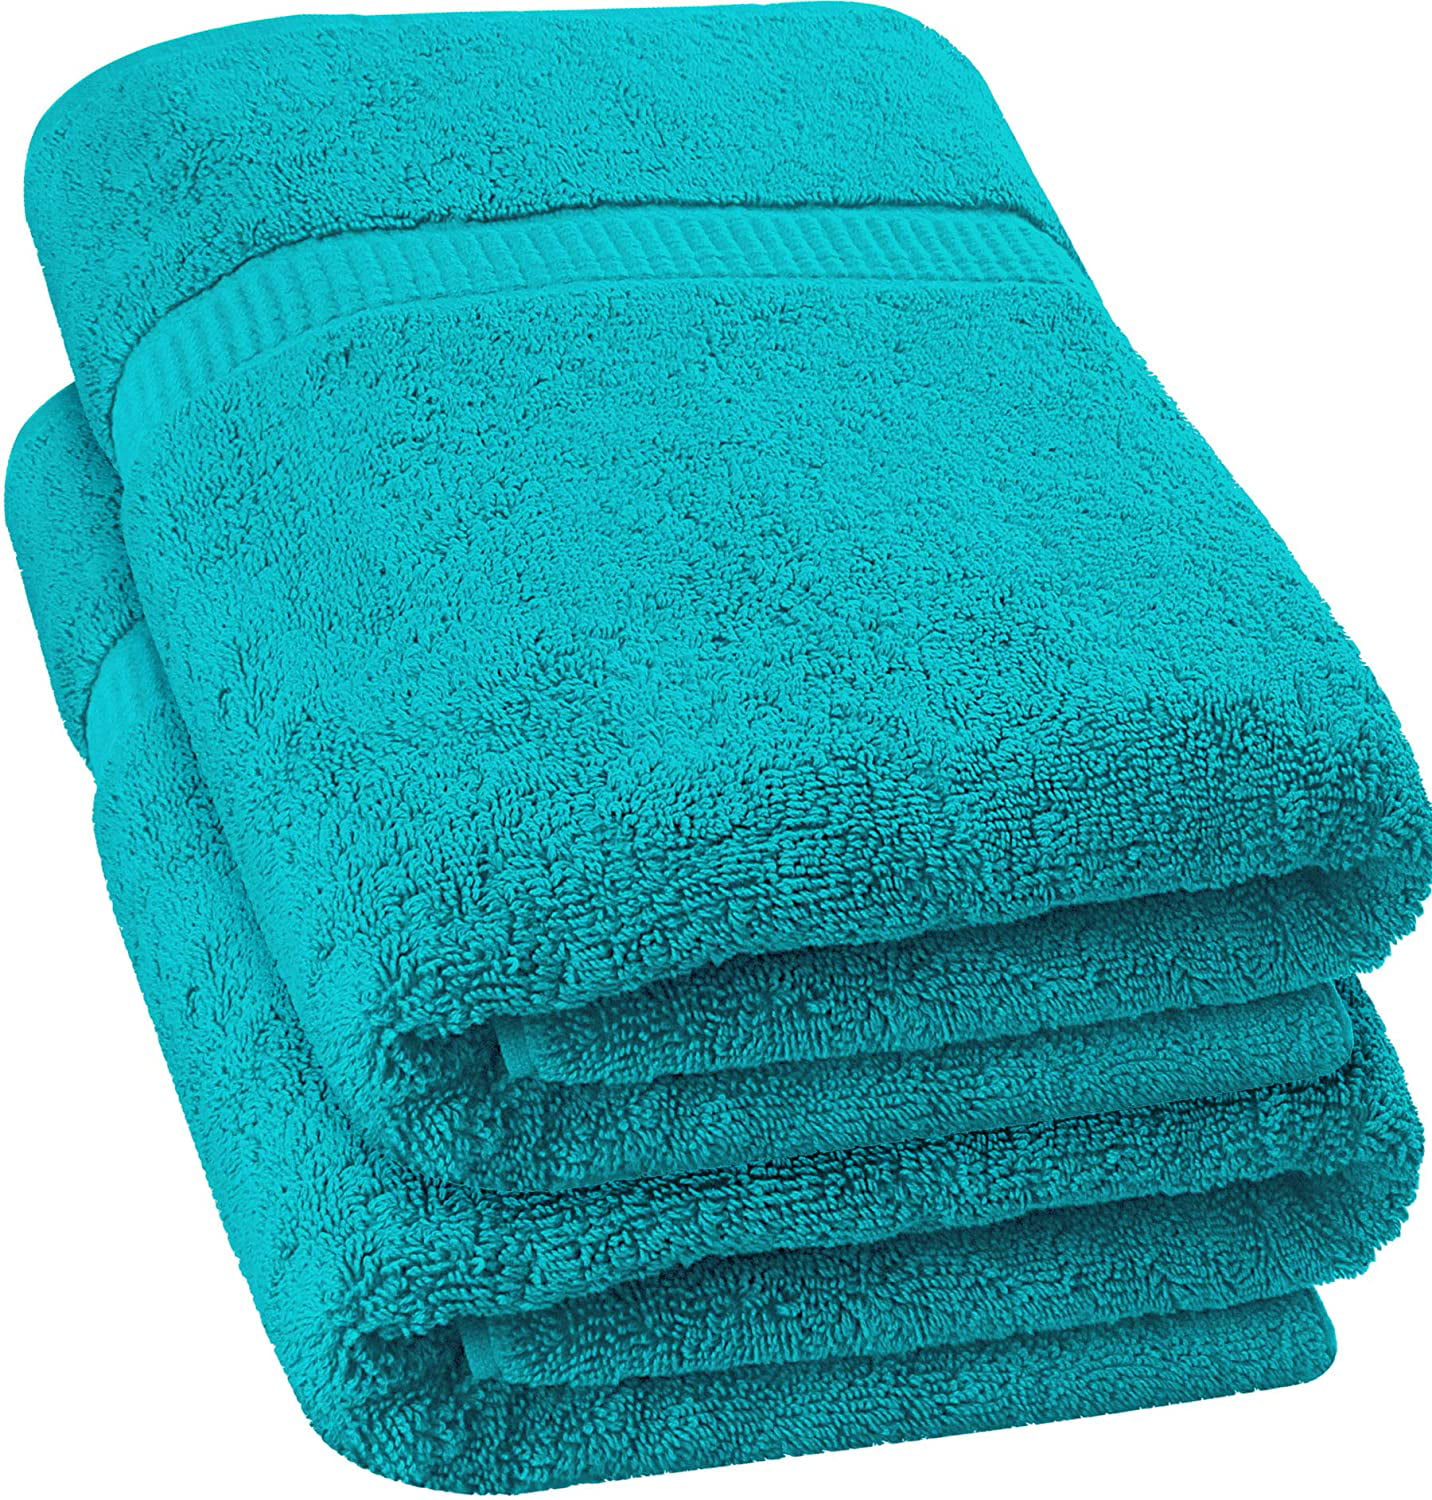 2 white hotel bath sheet jumbo large towel size 30x60 turkish cotton soft feel